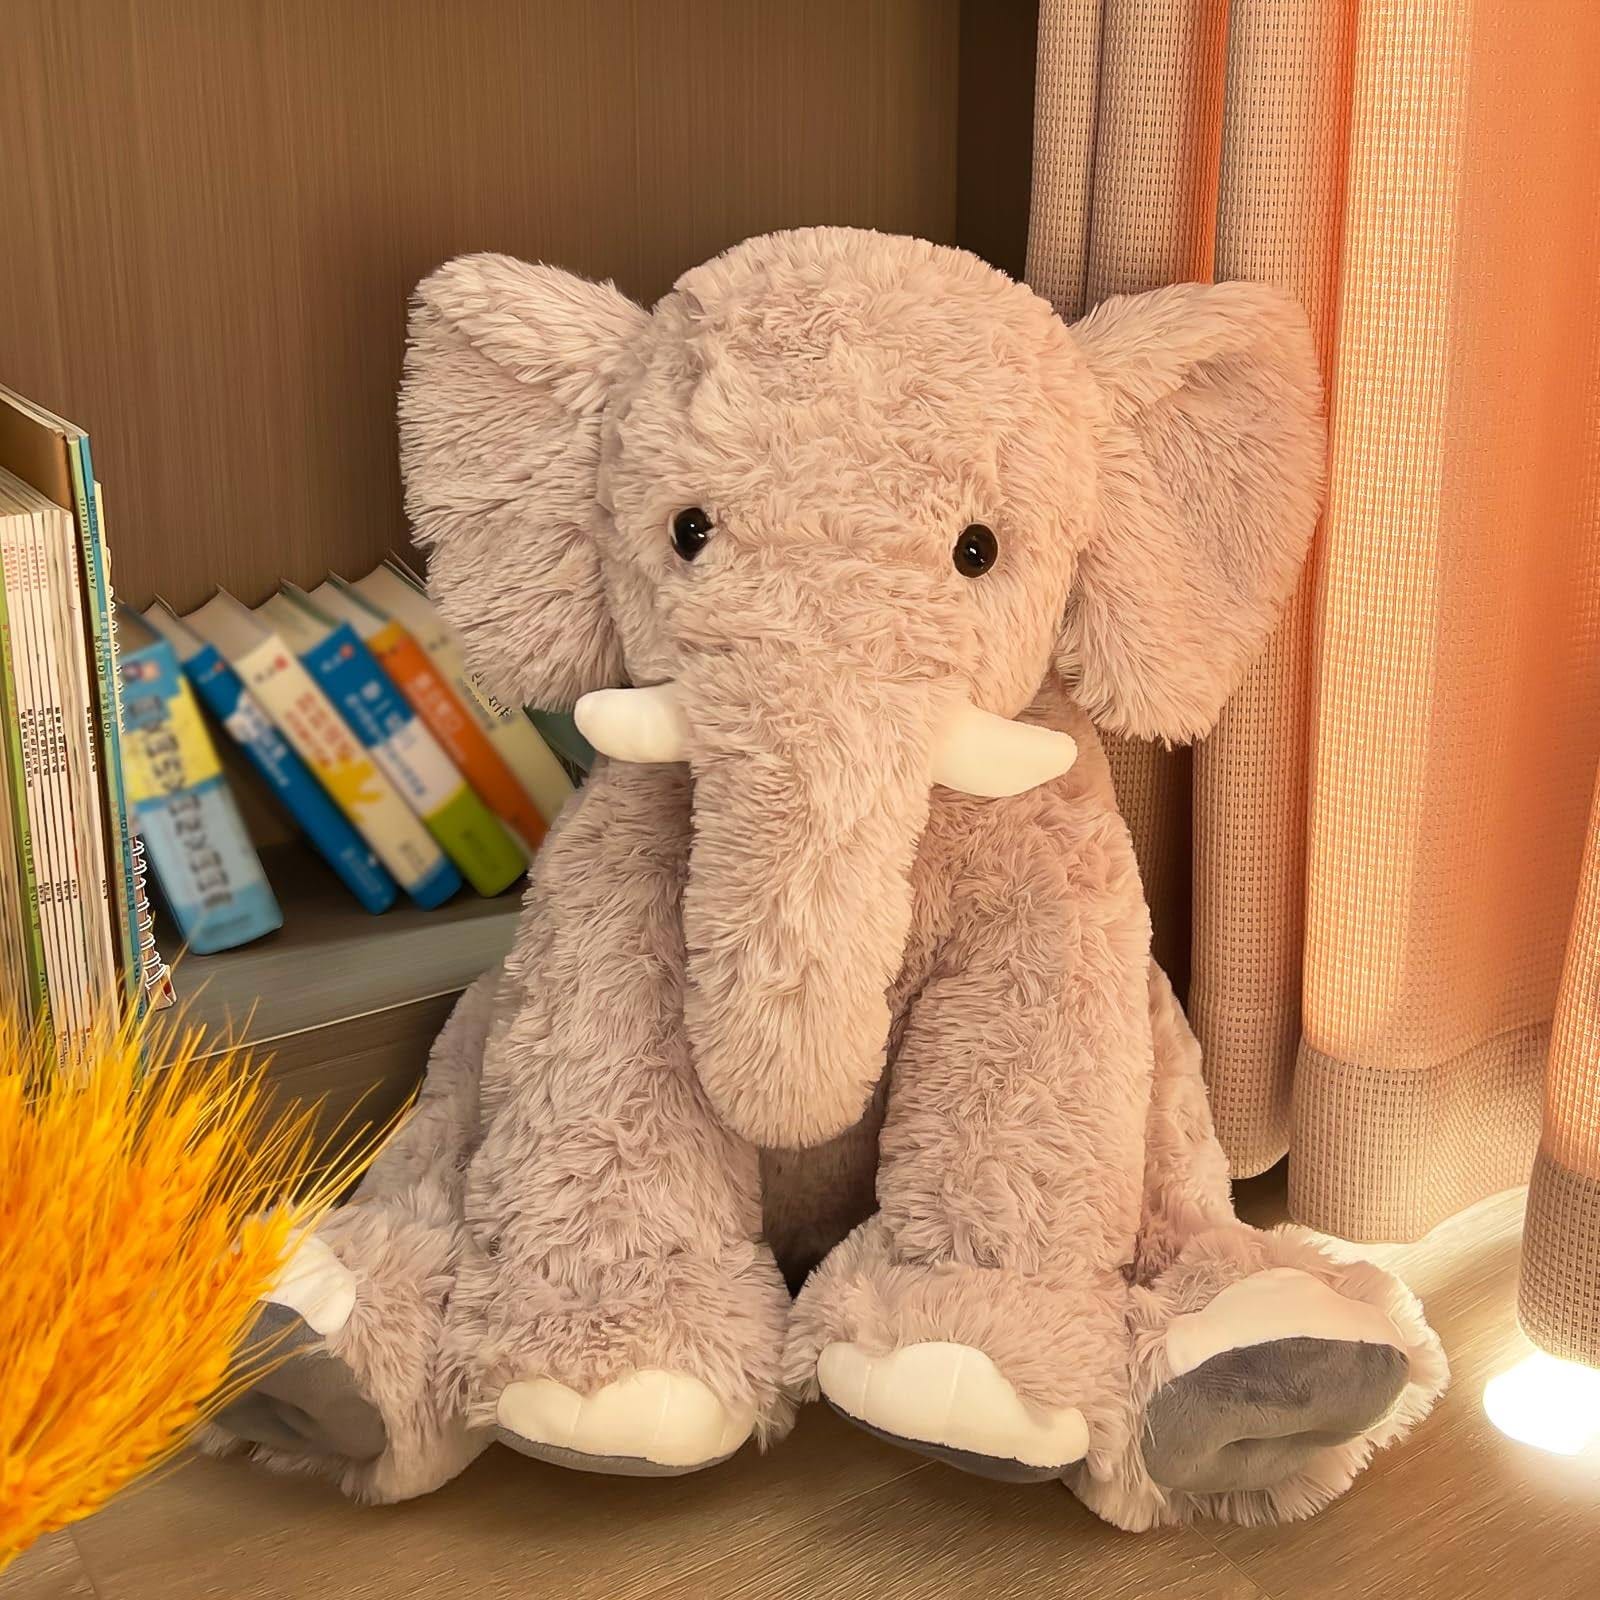 Large Stuffed Elephant Plush Pillow for Cozy Rest | Image